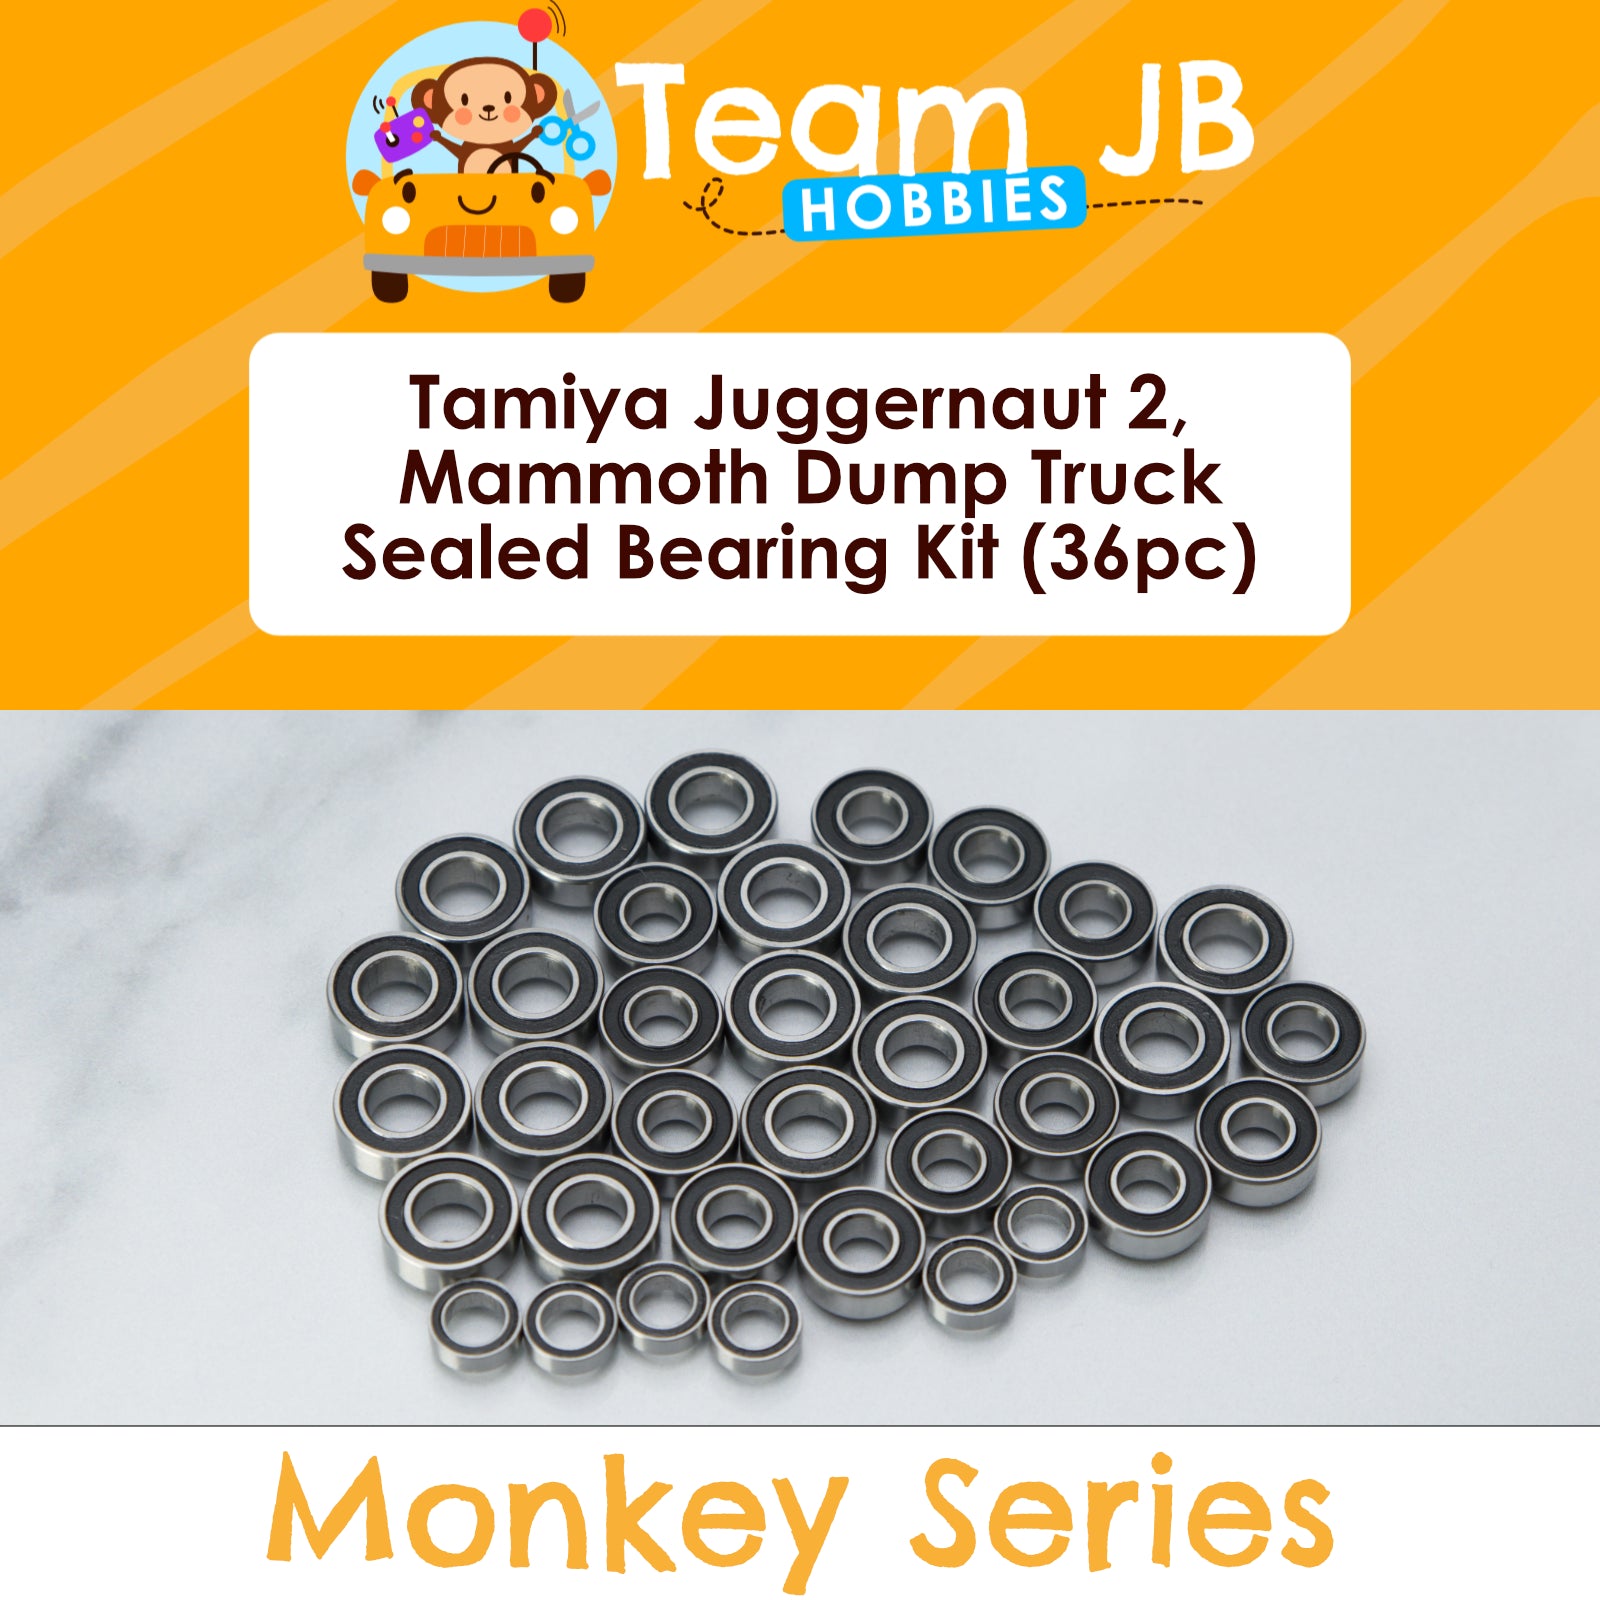 Tamiya Juggernaut 2, Mammoth Dump Truck - Sealed Bearing Kit